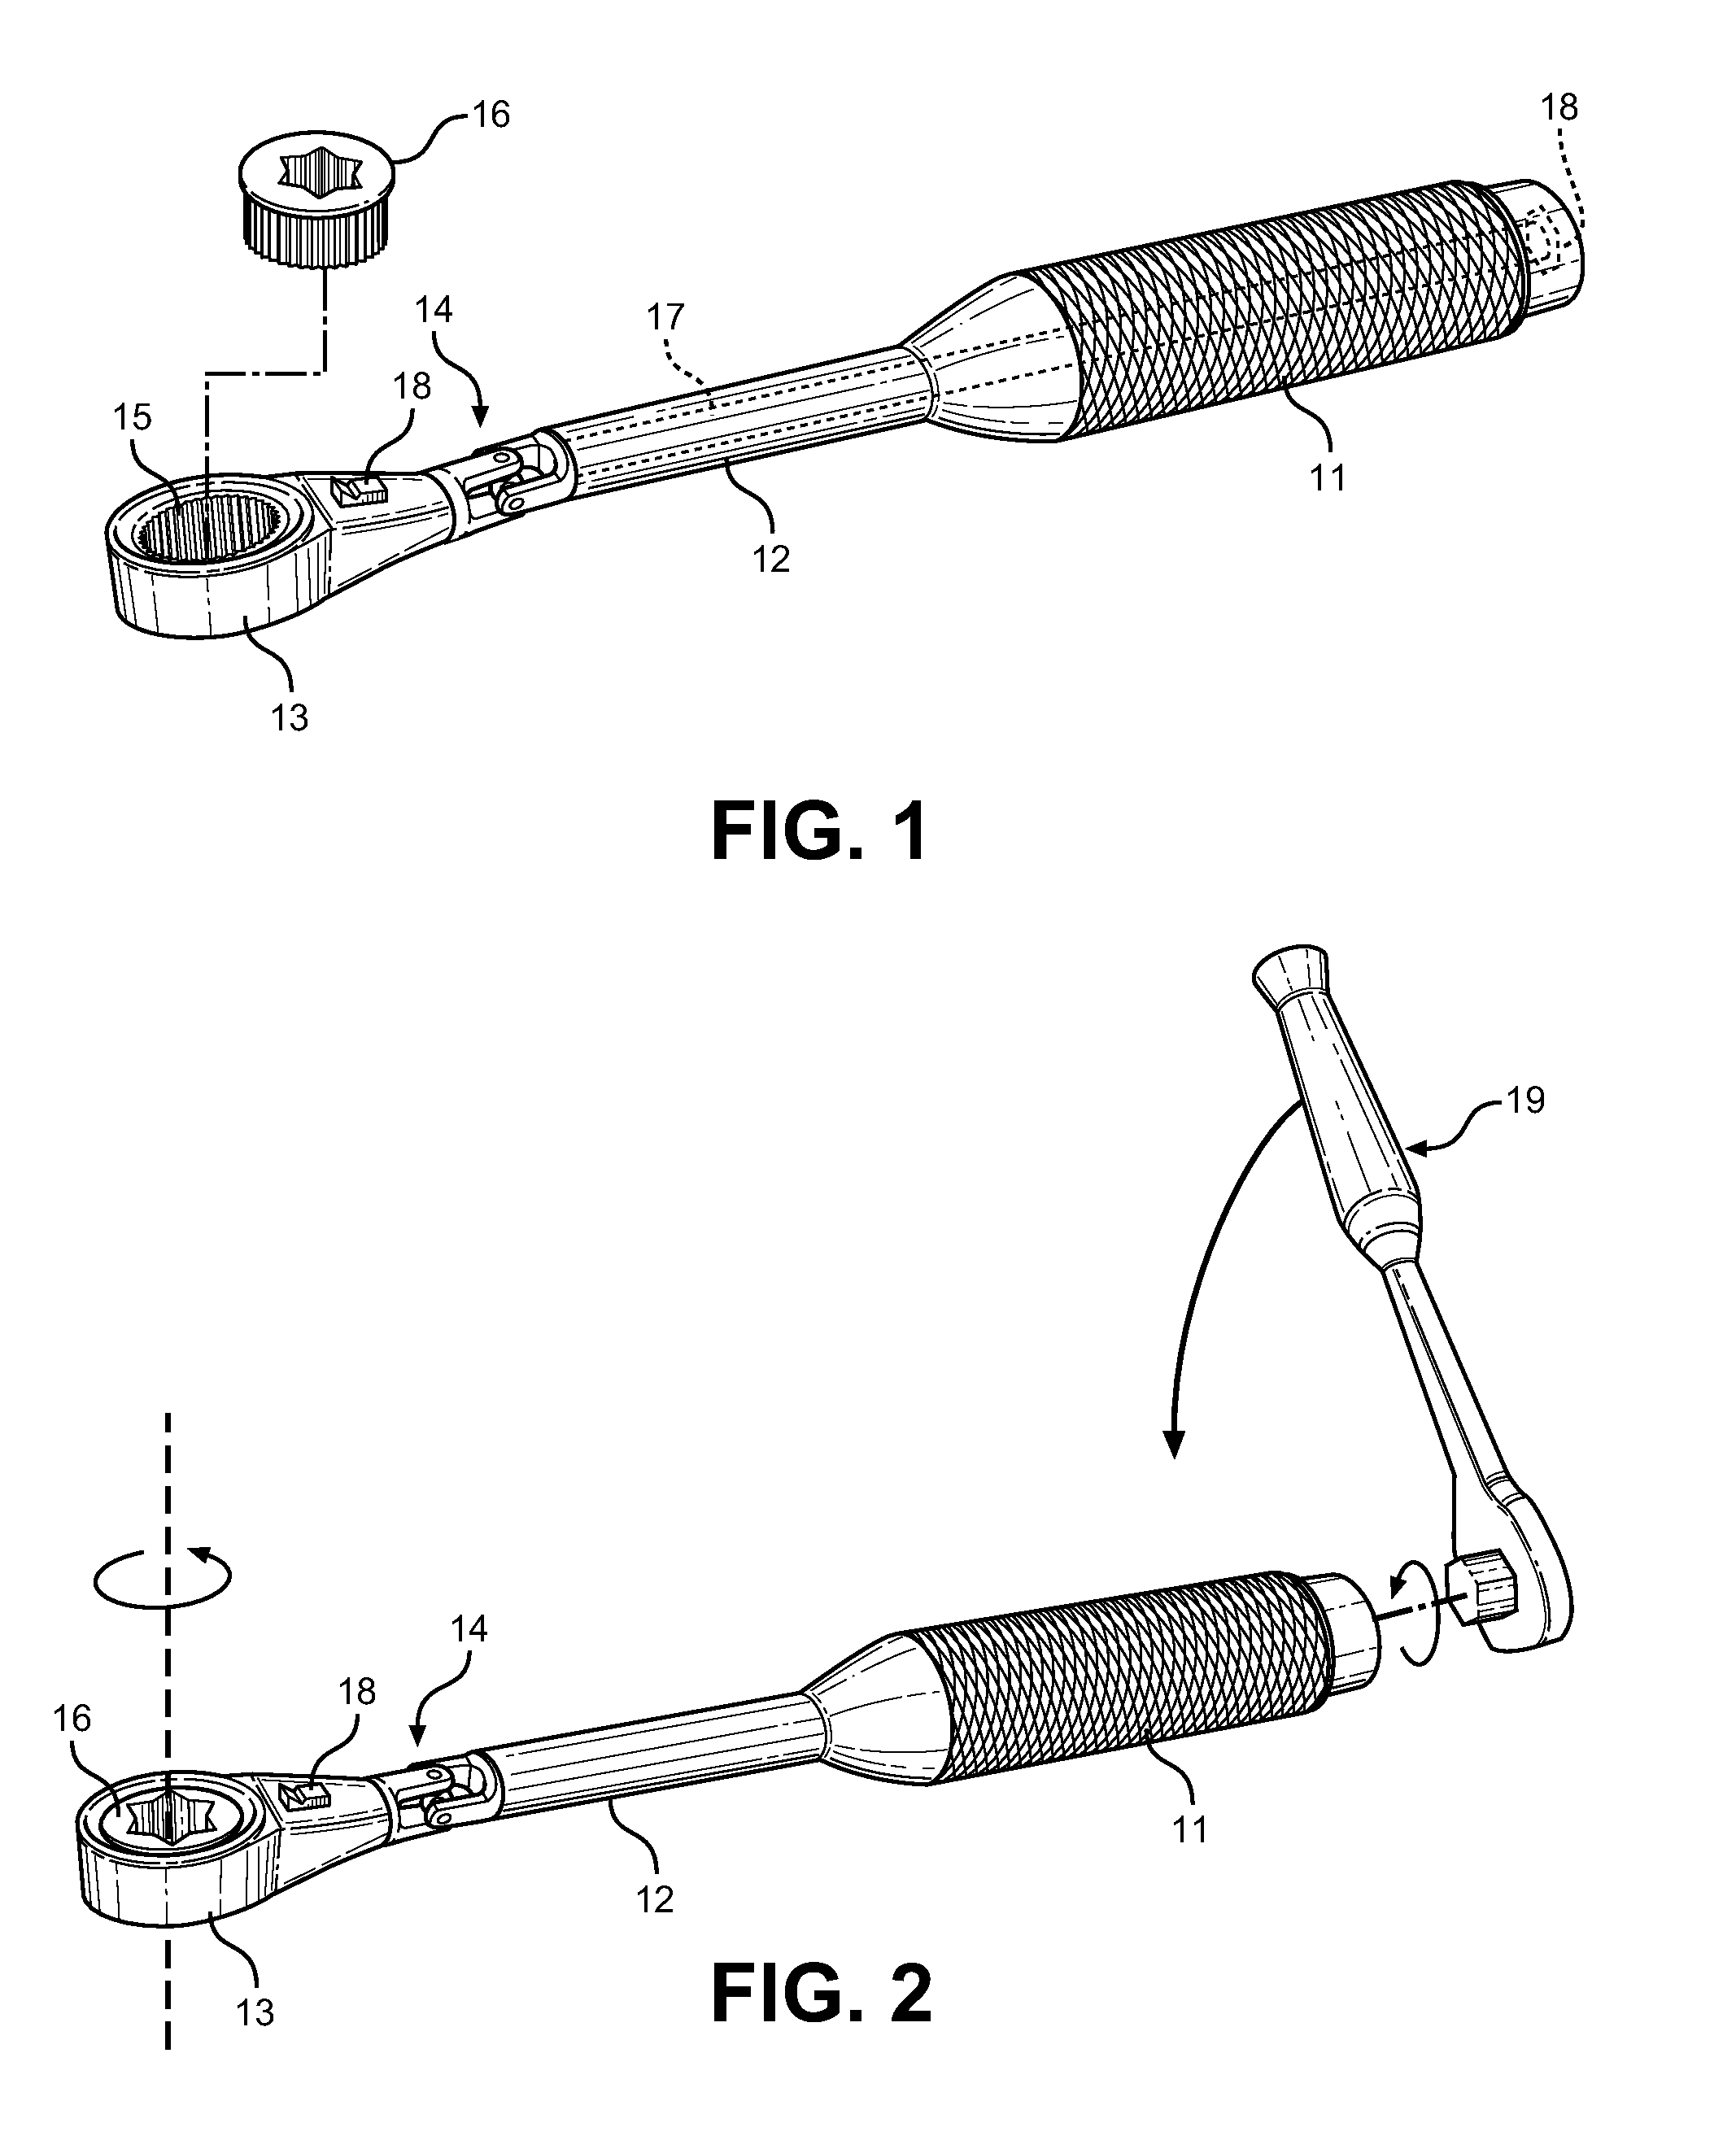 Handle-Driven Torque Transfer Wrench having Pivotable Head